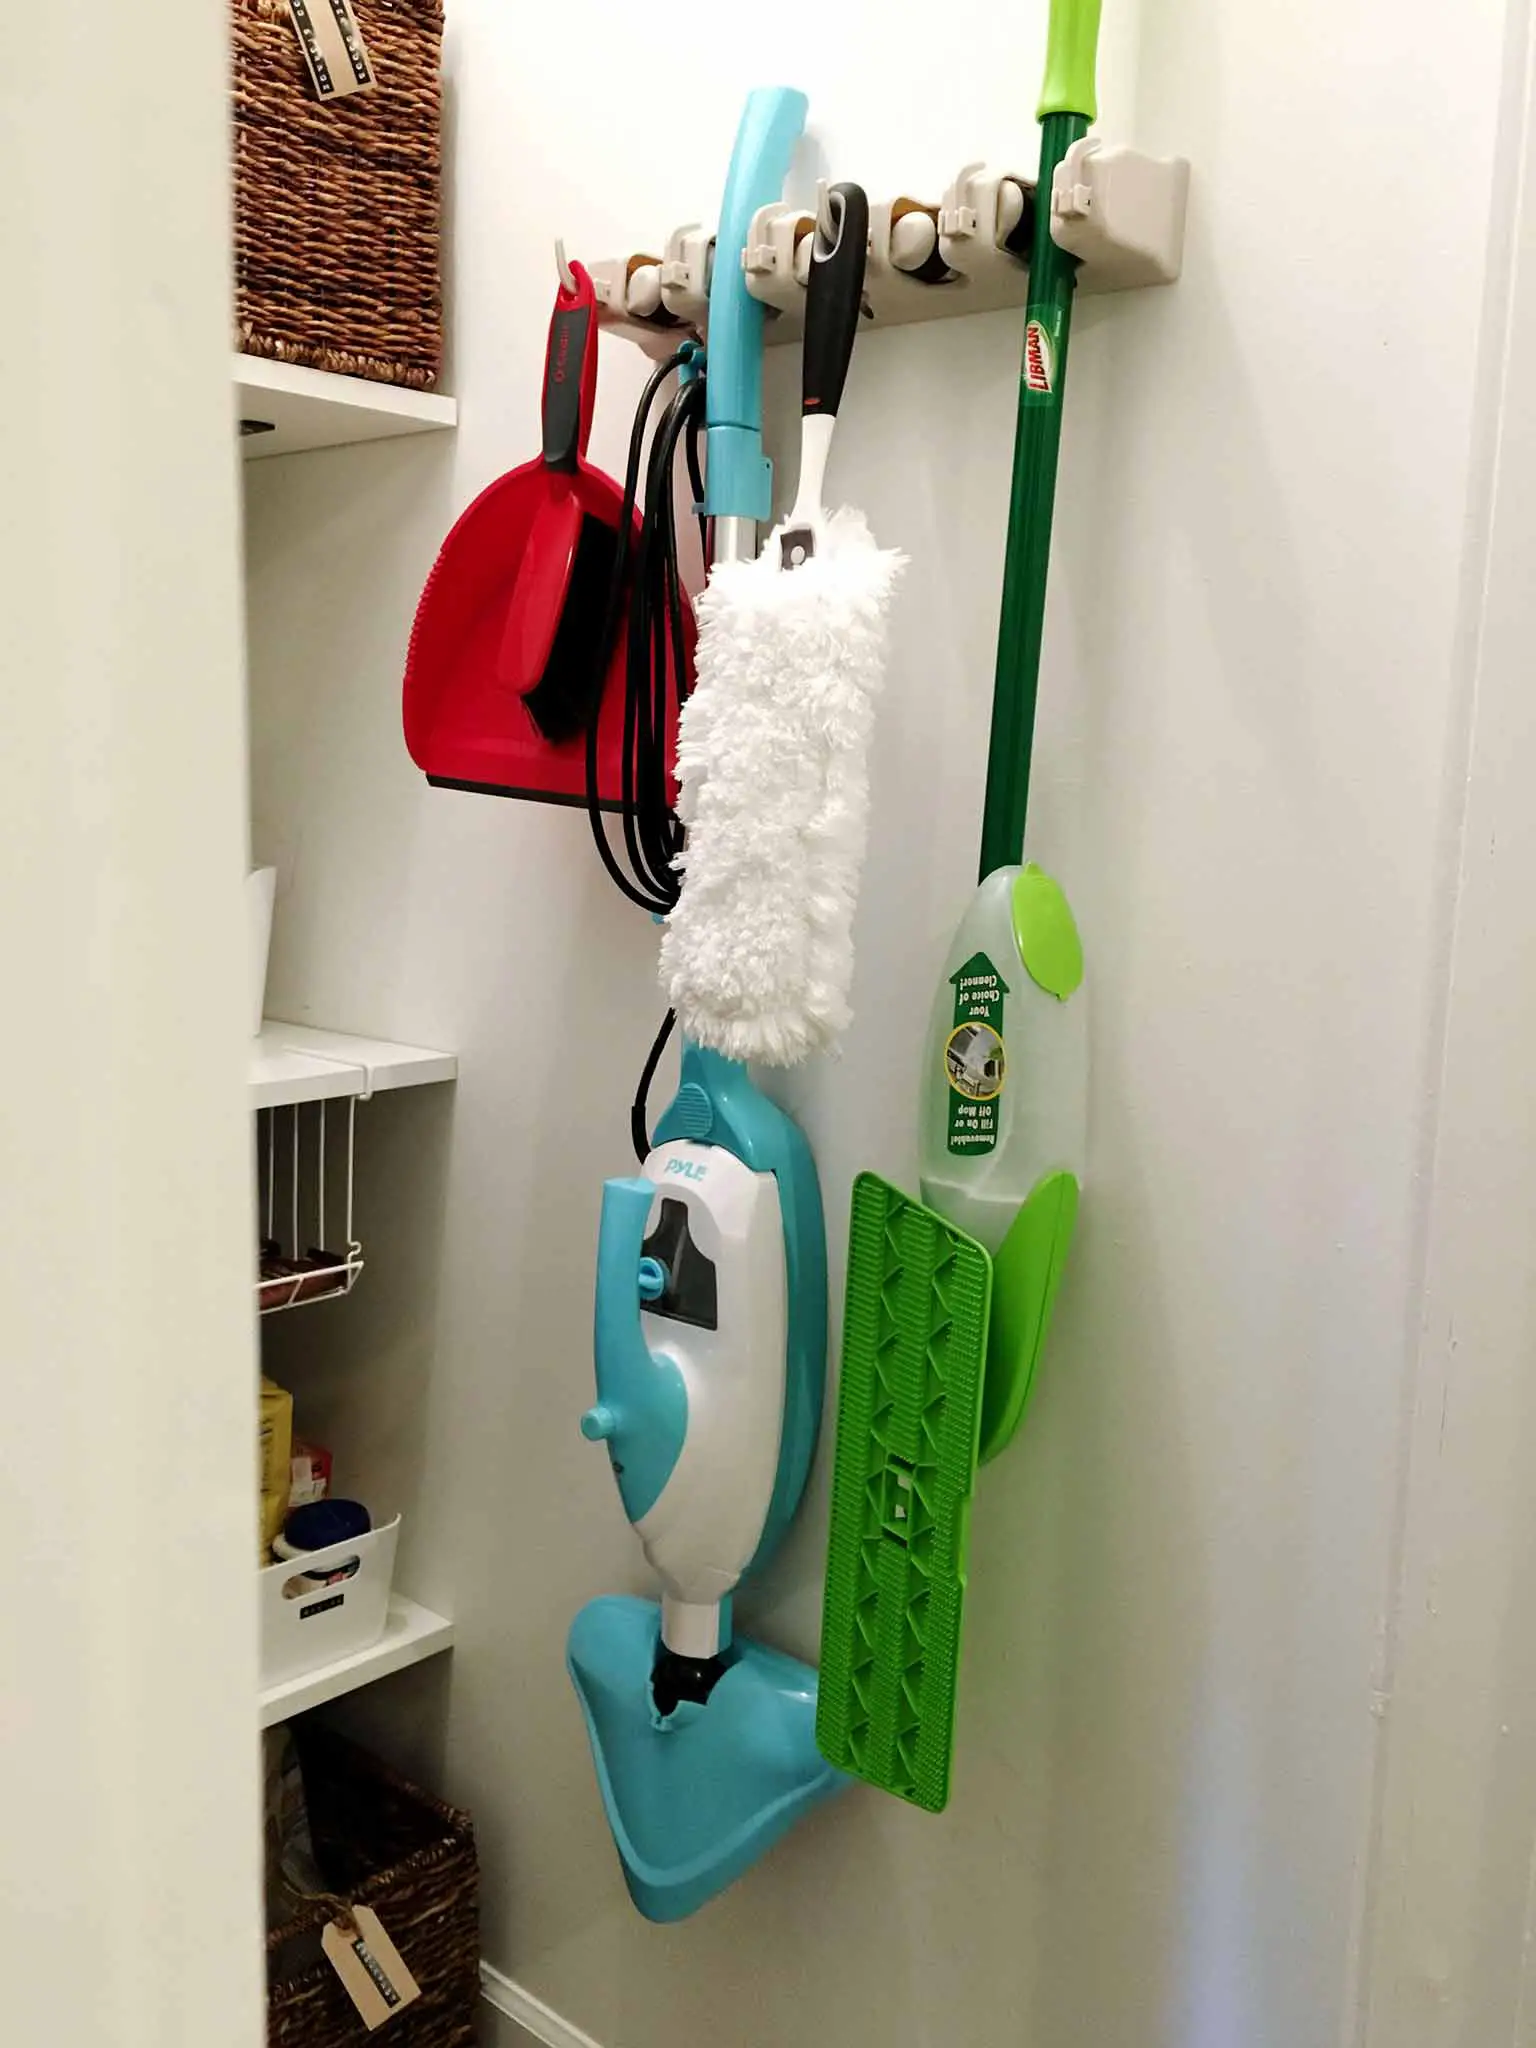 Cleaning supplies - That Homebird Life Blog